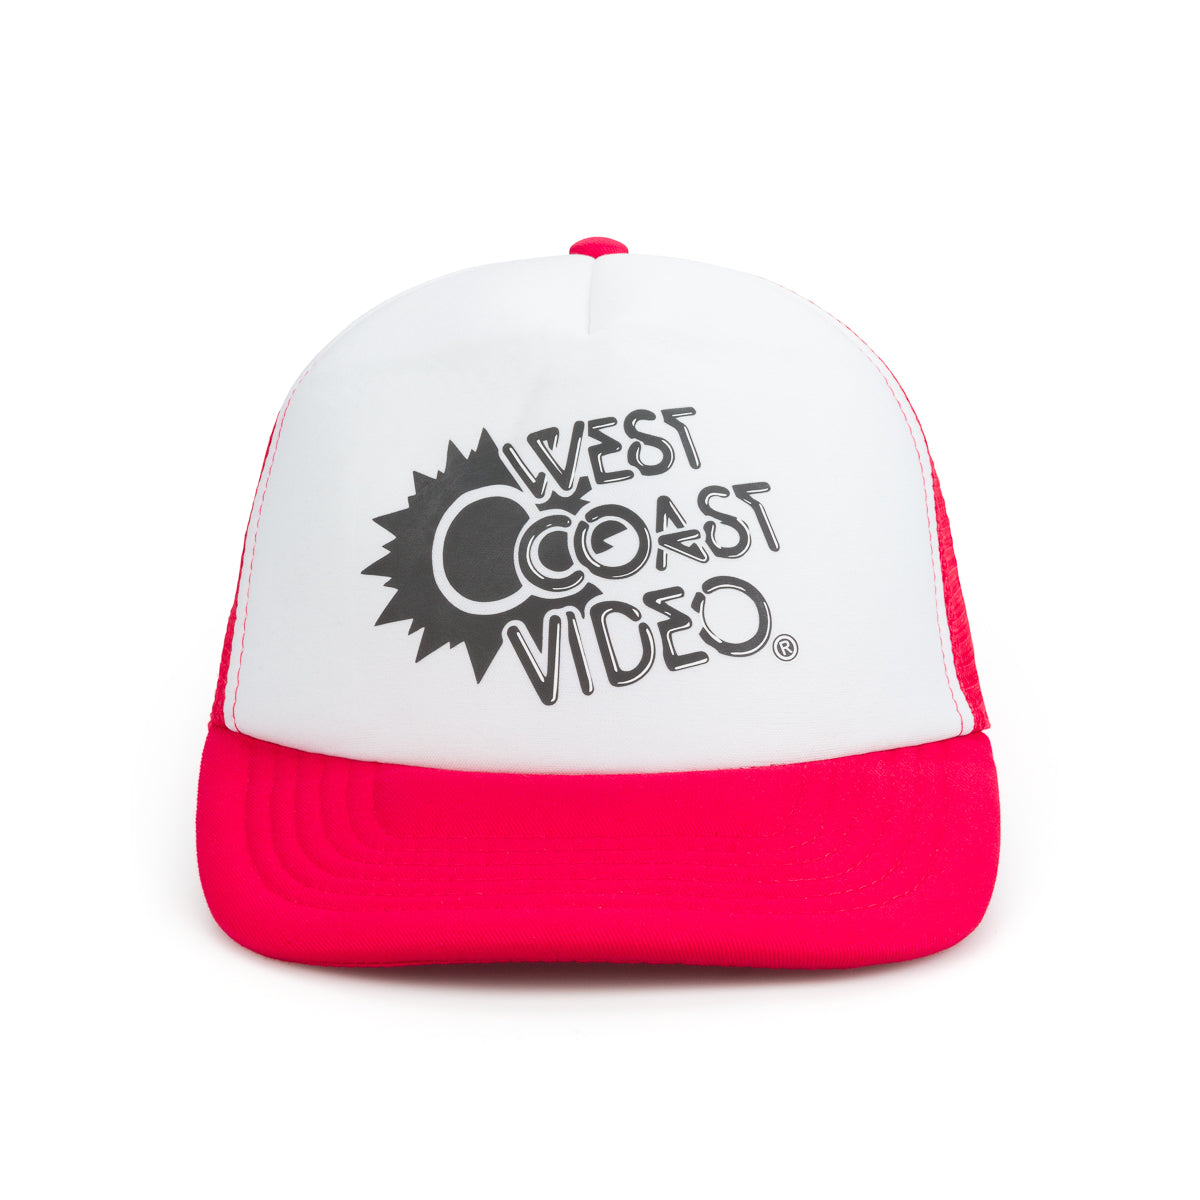 WEST COAST VIDEO Mesh Cap